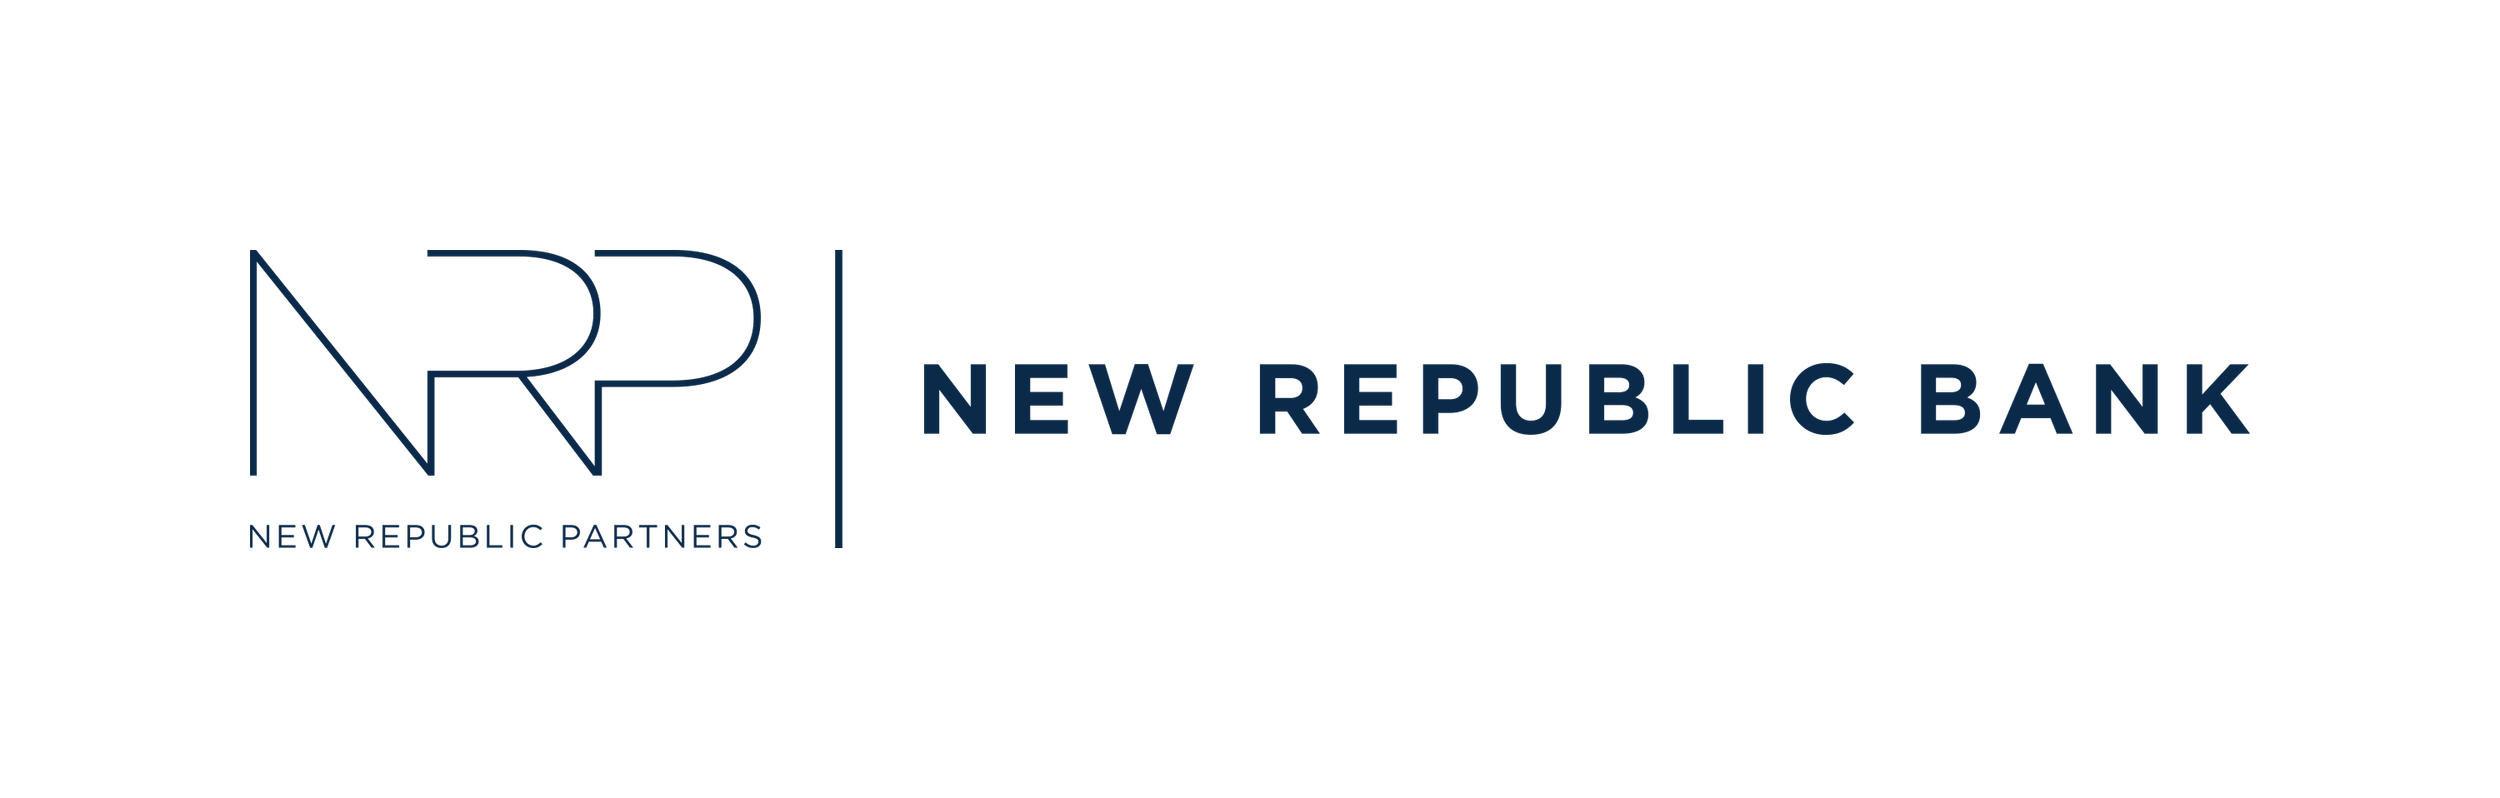 NRP NRB logo color 2.png